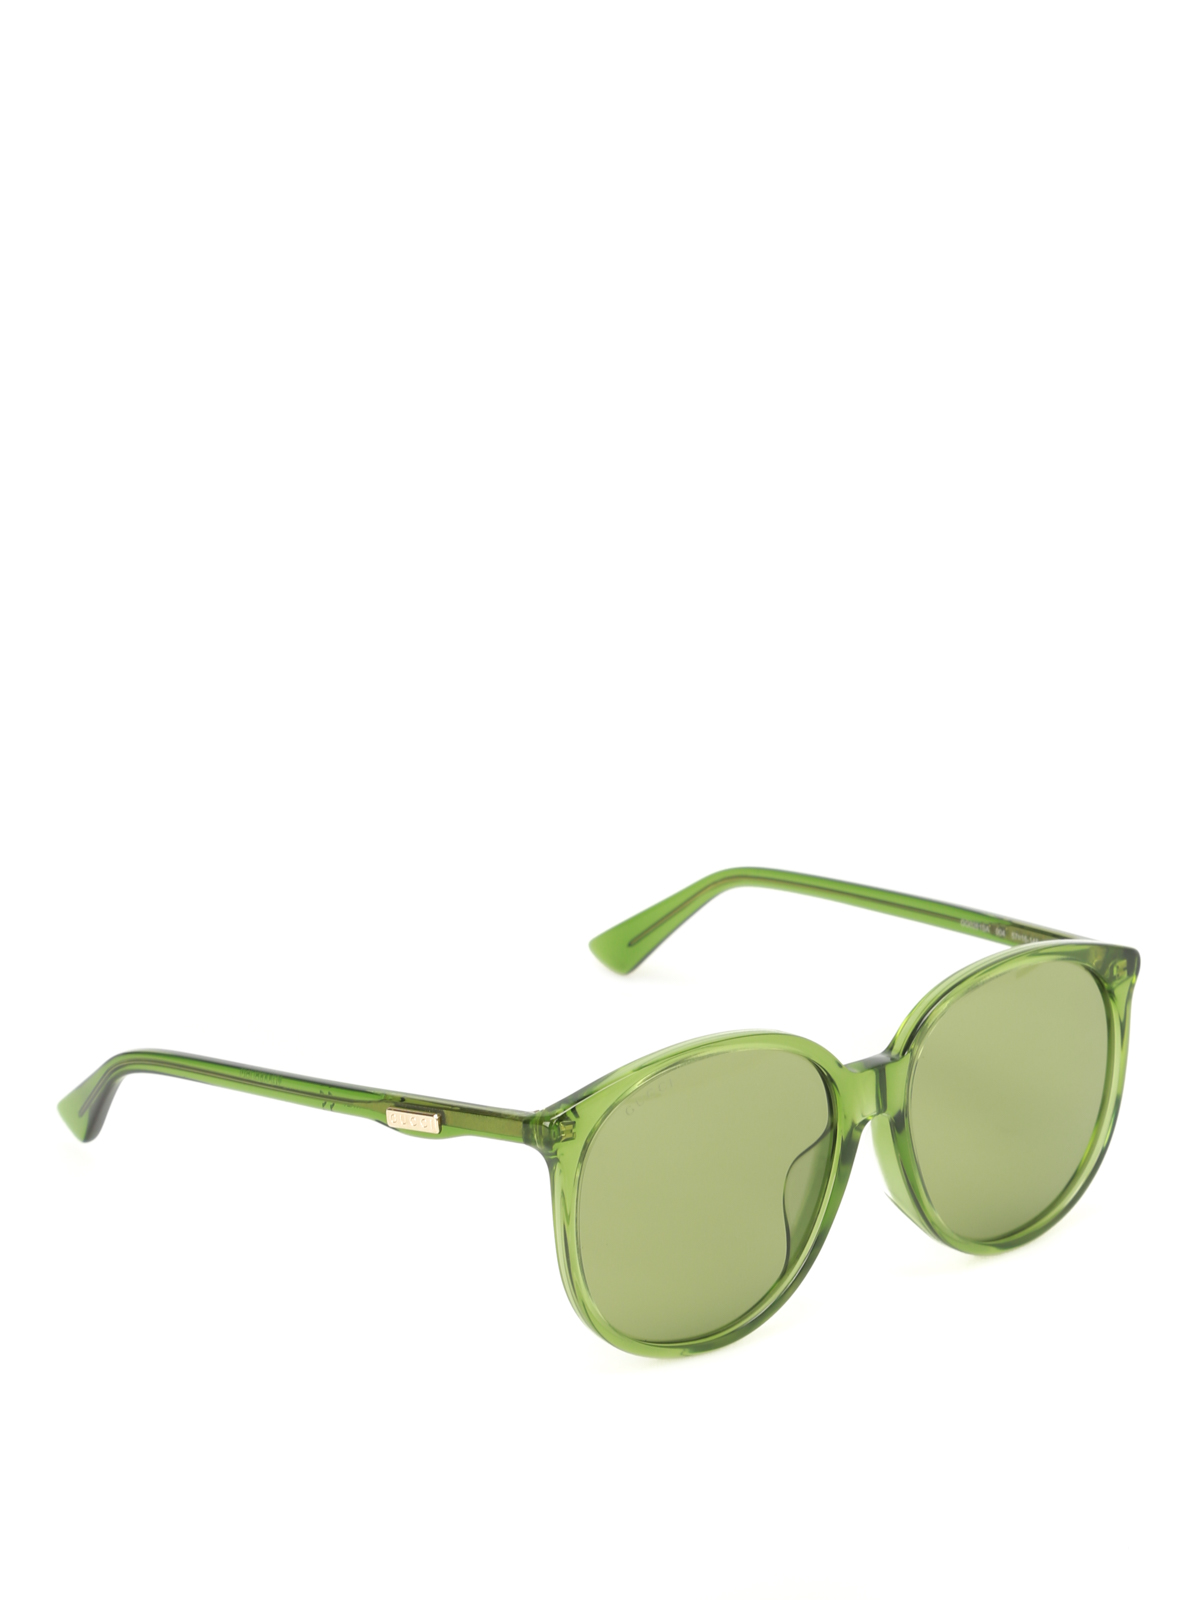 Sunglasses Gucci - sunglasses - | Shop online iKRIX